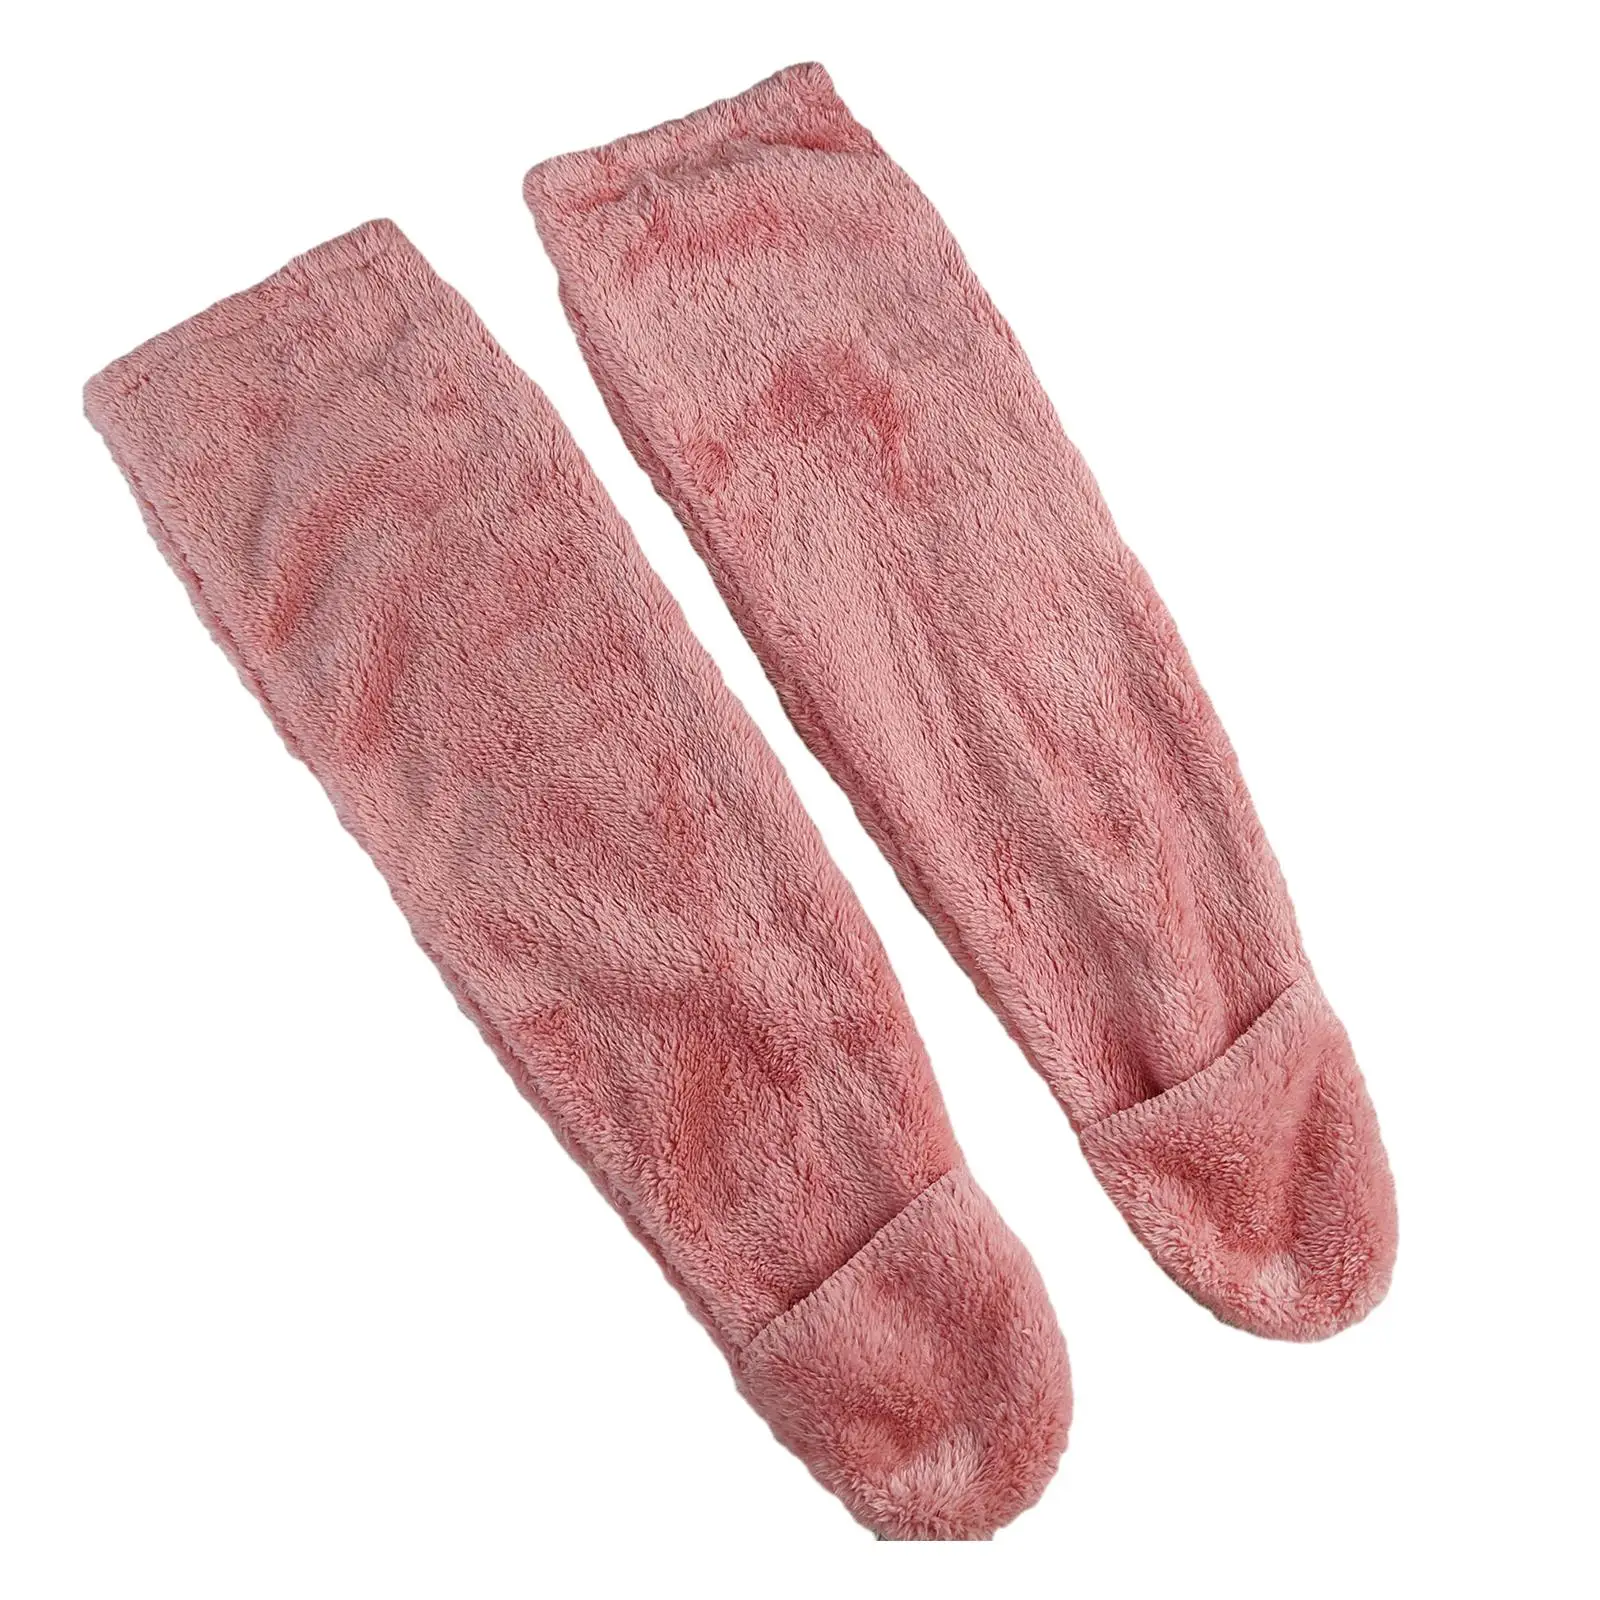 Plush Leg Warmer Winter Soft Long Tube Stockings Fuzzy Socks Sleeping Socks Warm Thick Womens Knee High Socks for Dorm Bedroom